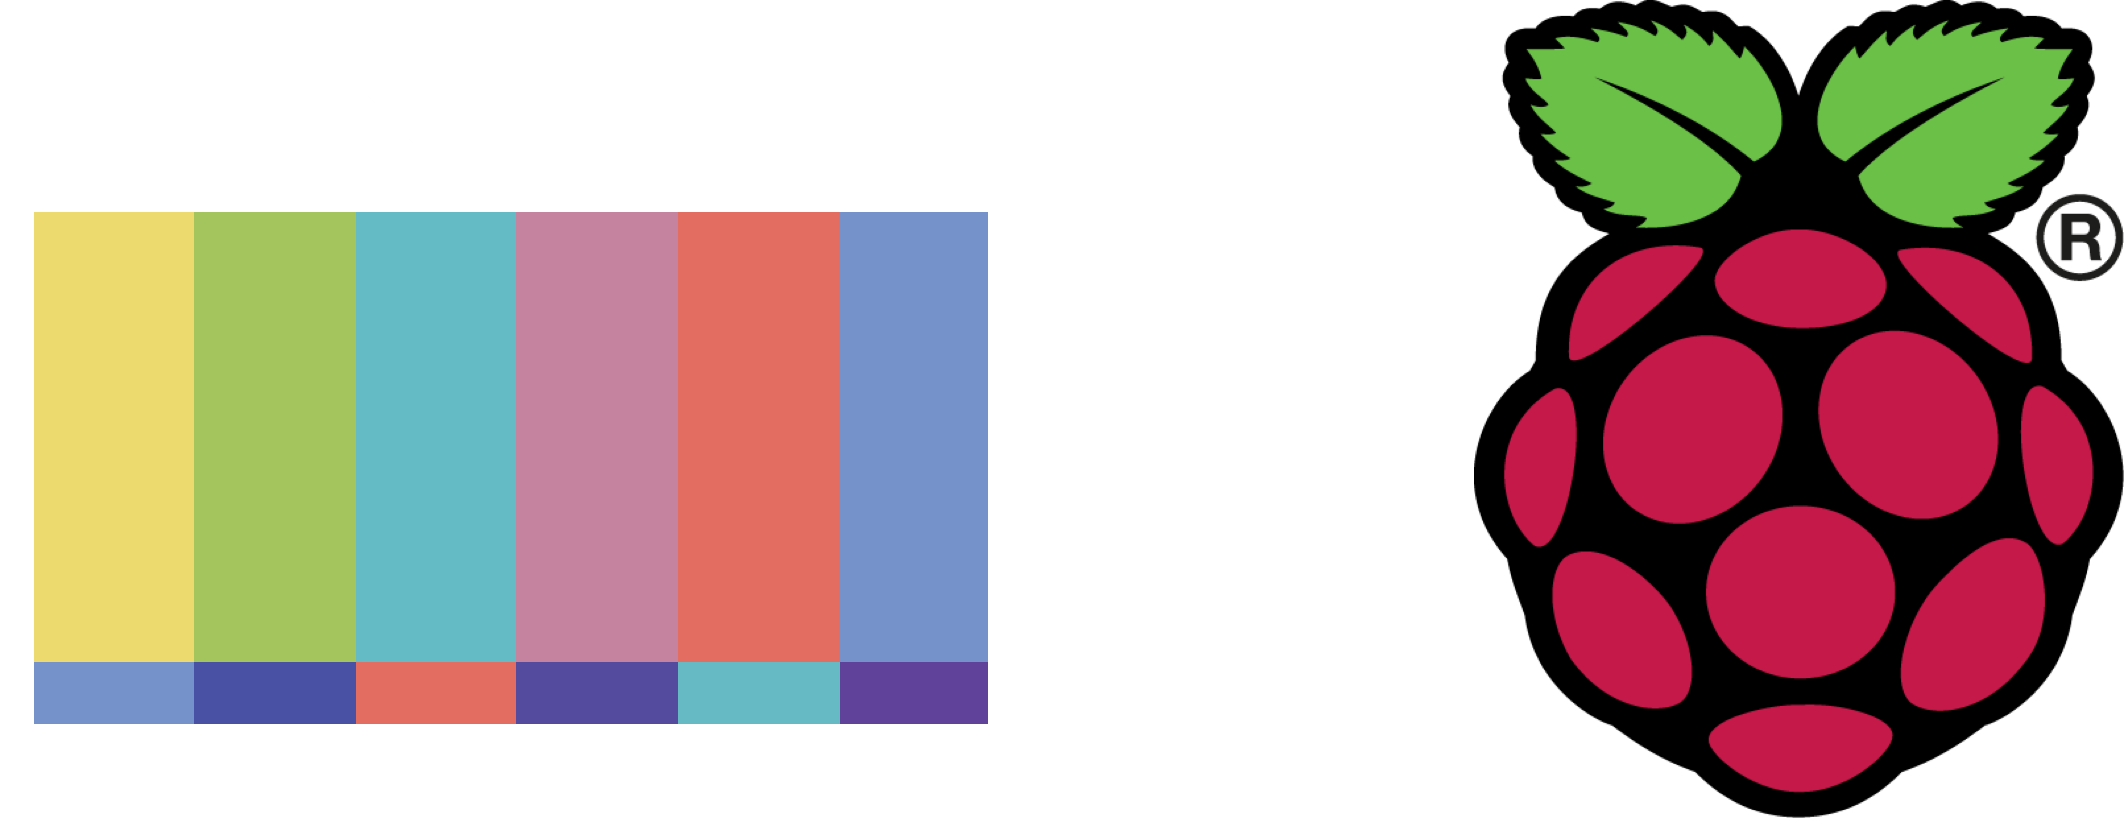 channels + raspberry pi